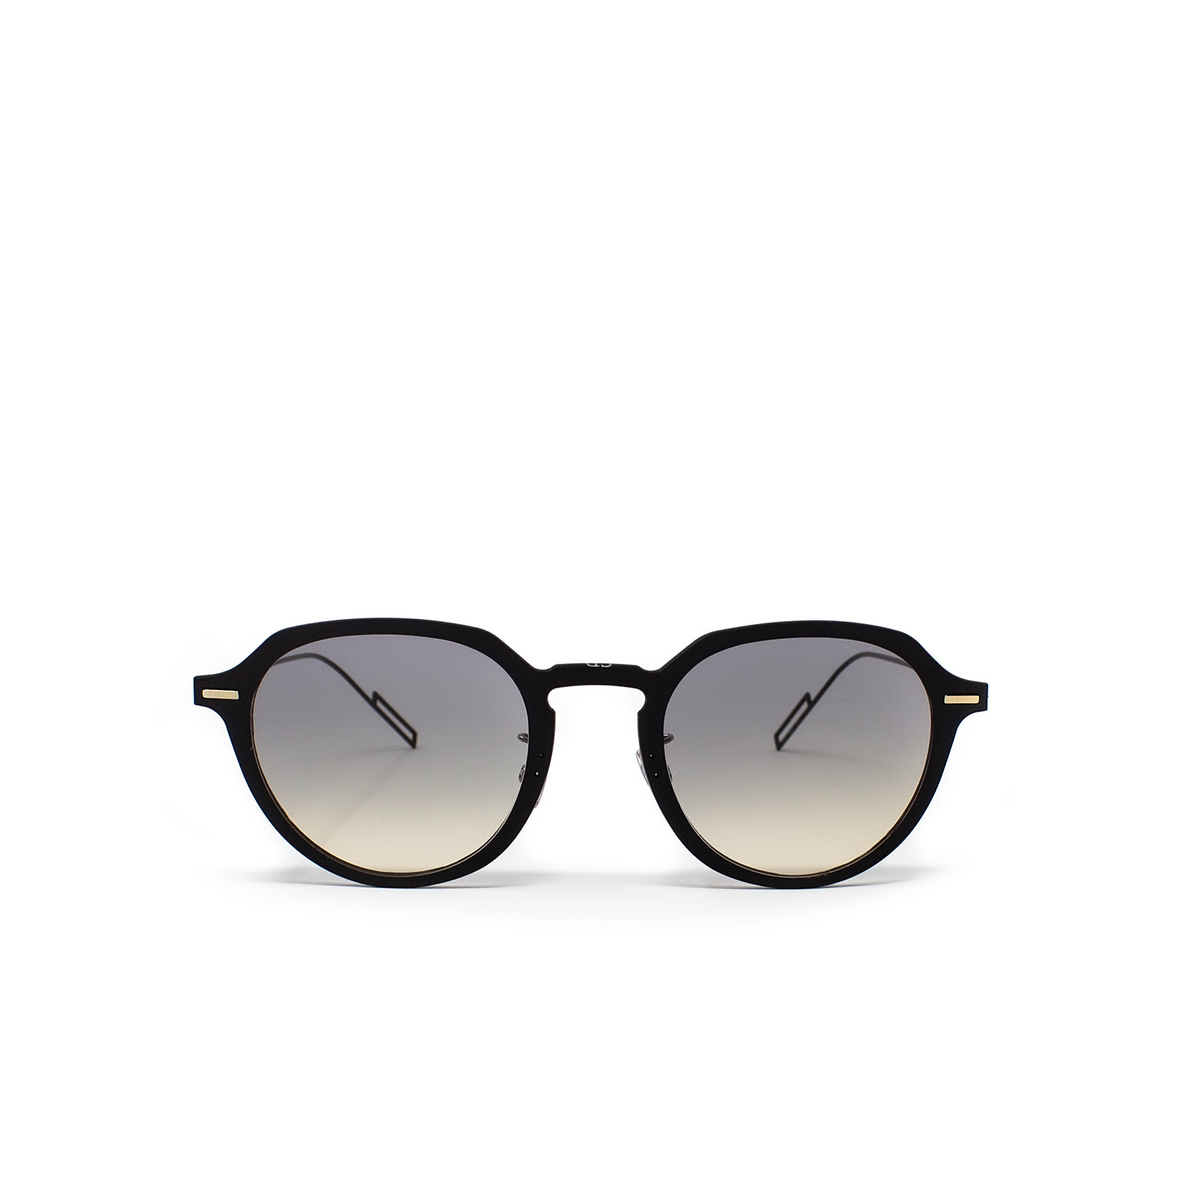 Dior DIORDISAPPEAR1 Sunglasses 003/1I Matte Black - front view